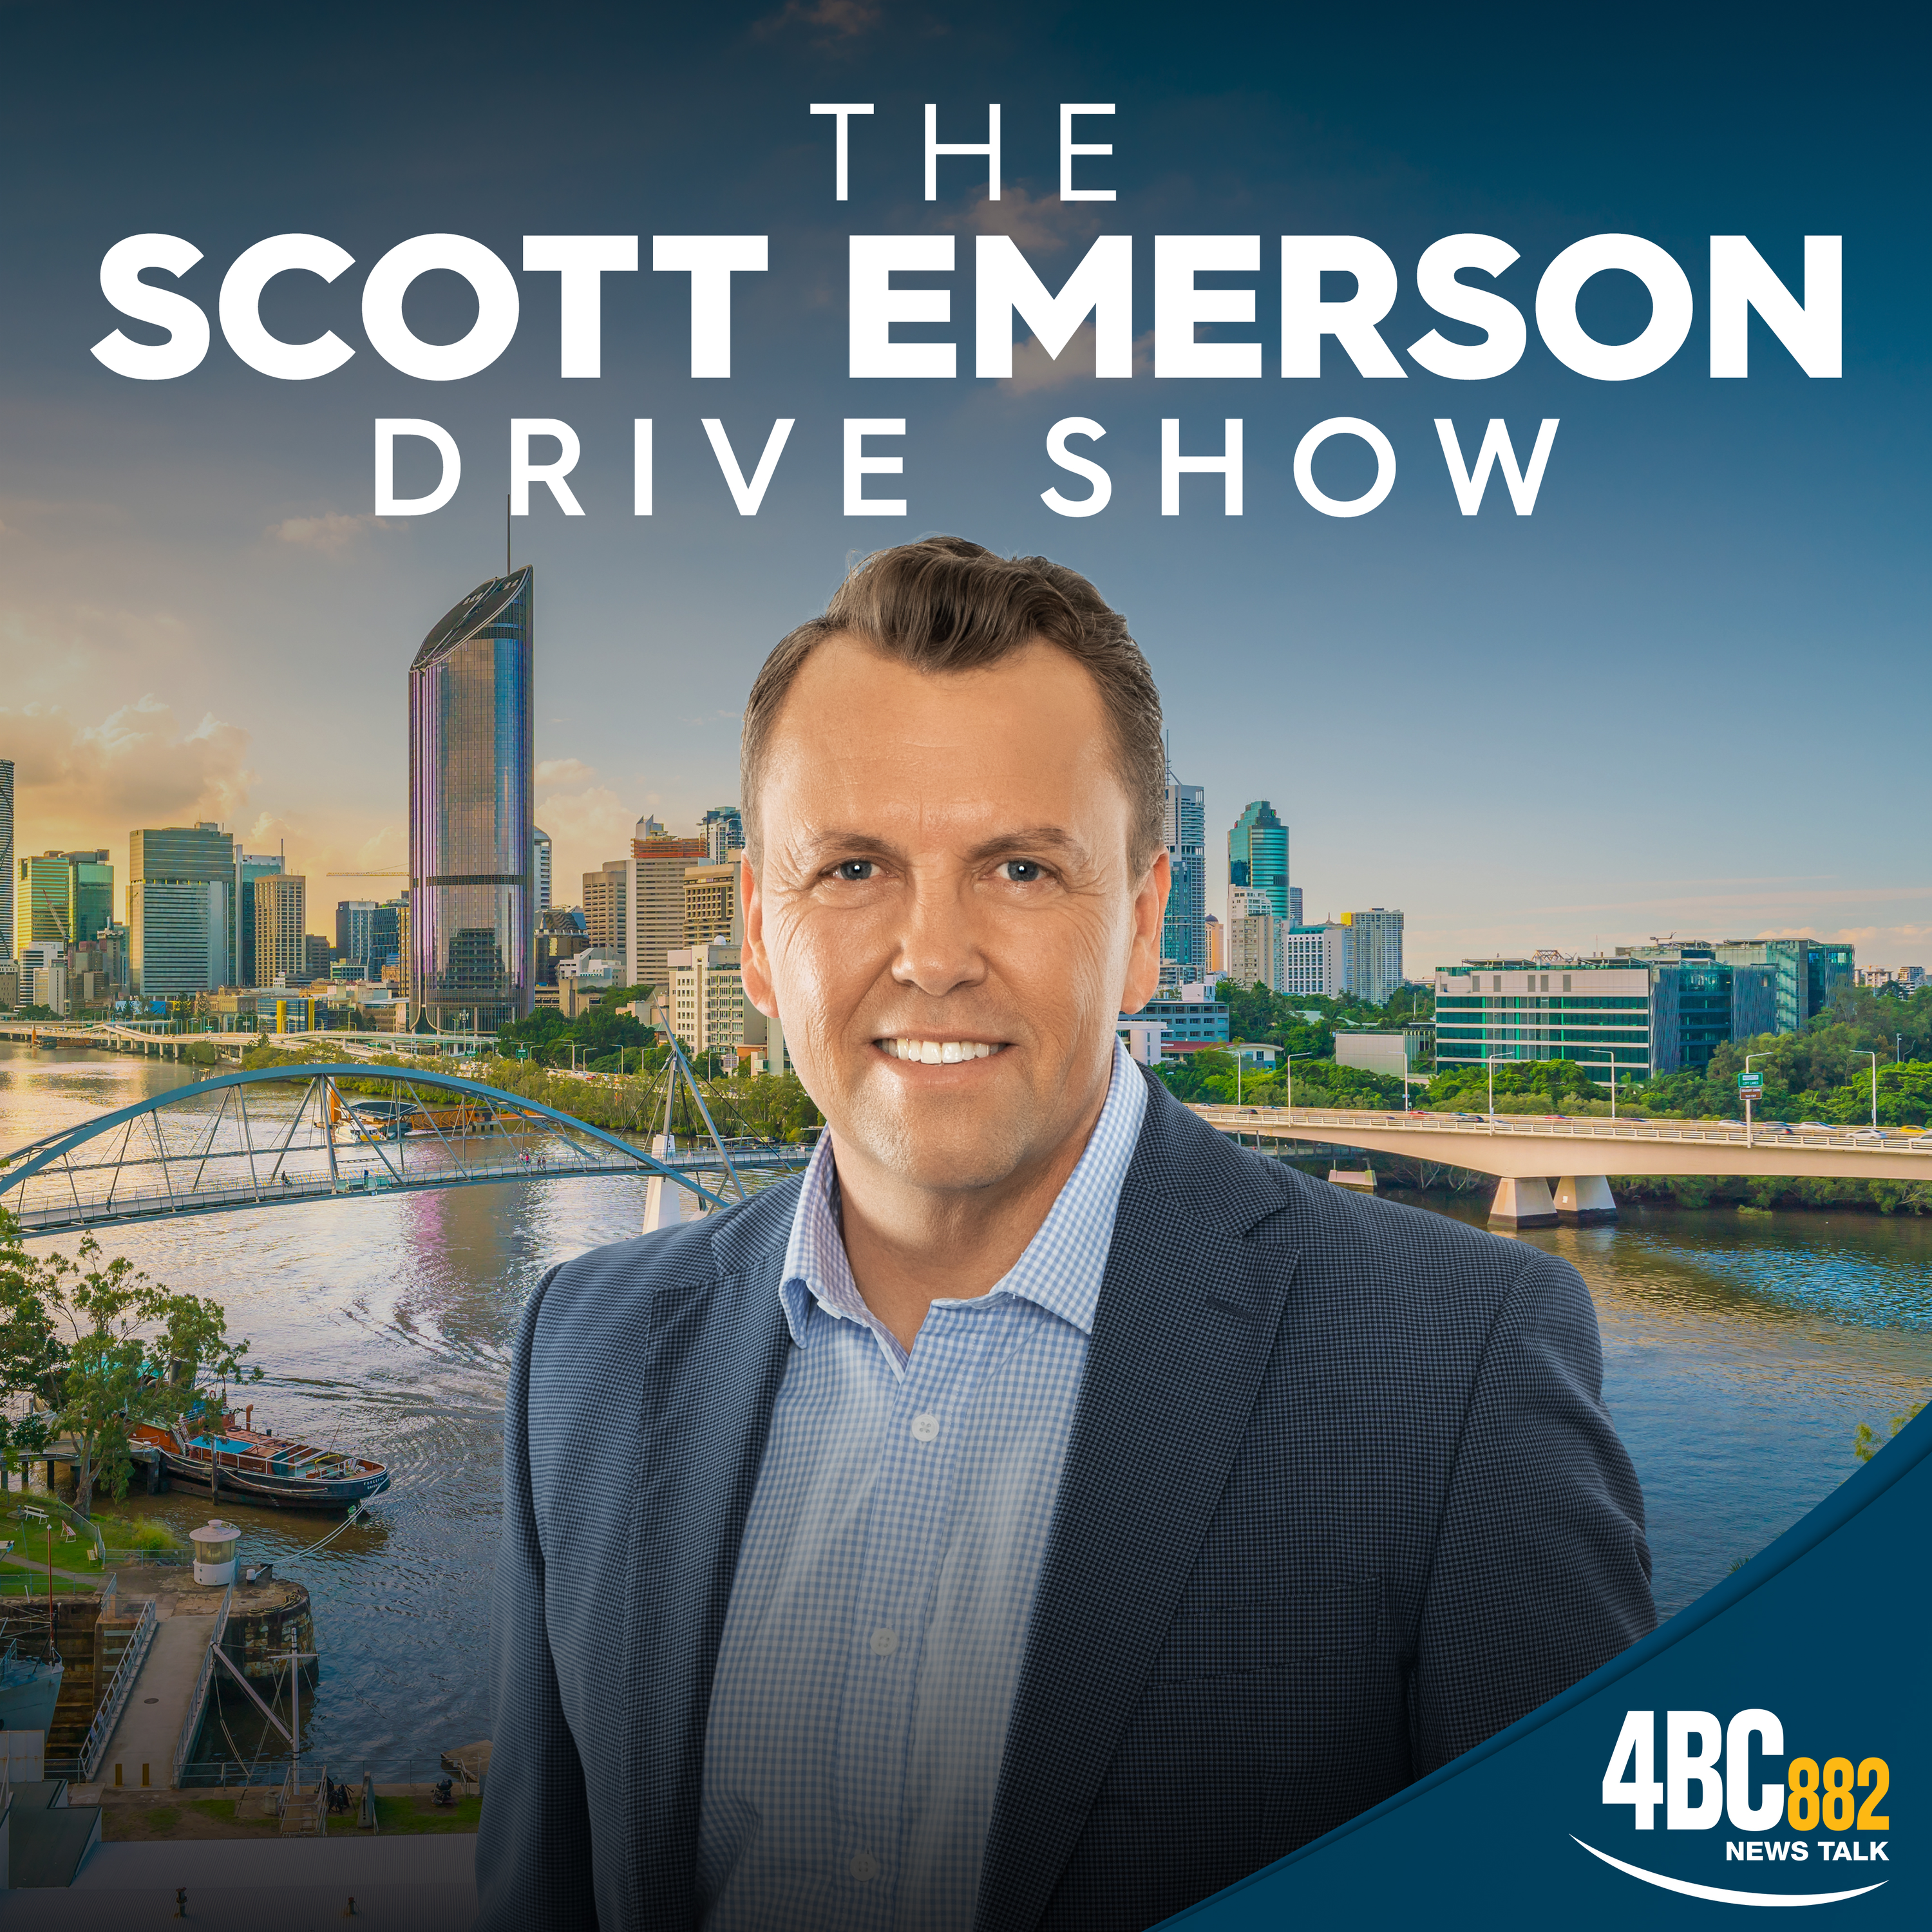 Full Show: The Scott Emerson Drive Show, Tuesday 9th November